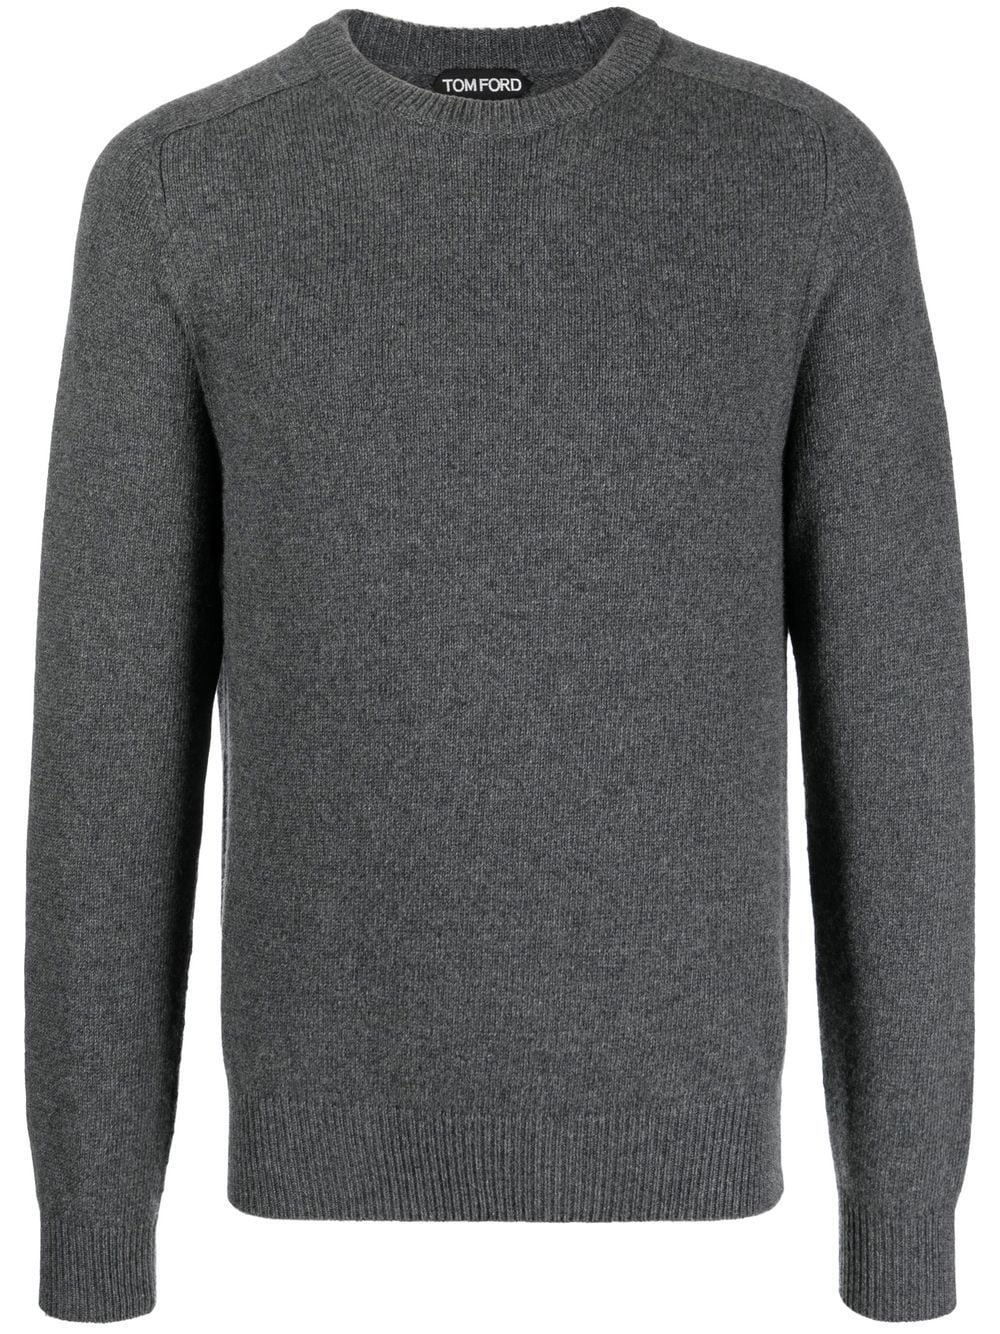 TOM FORD cashmere knitted jumper - Grey von TOM FORD